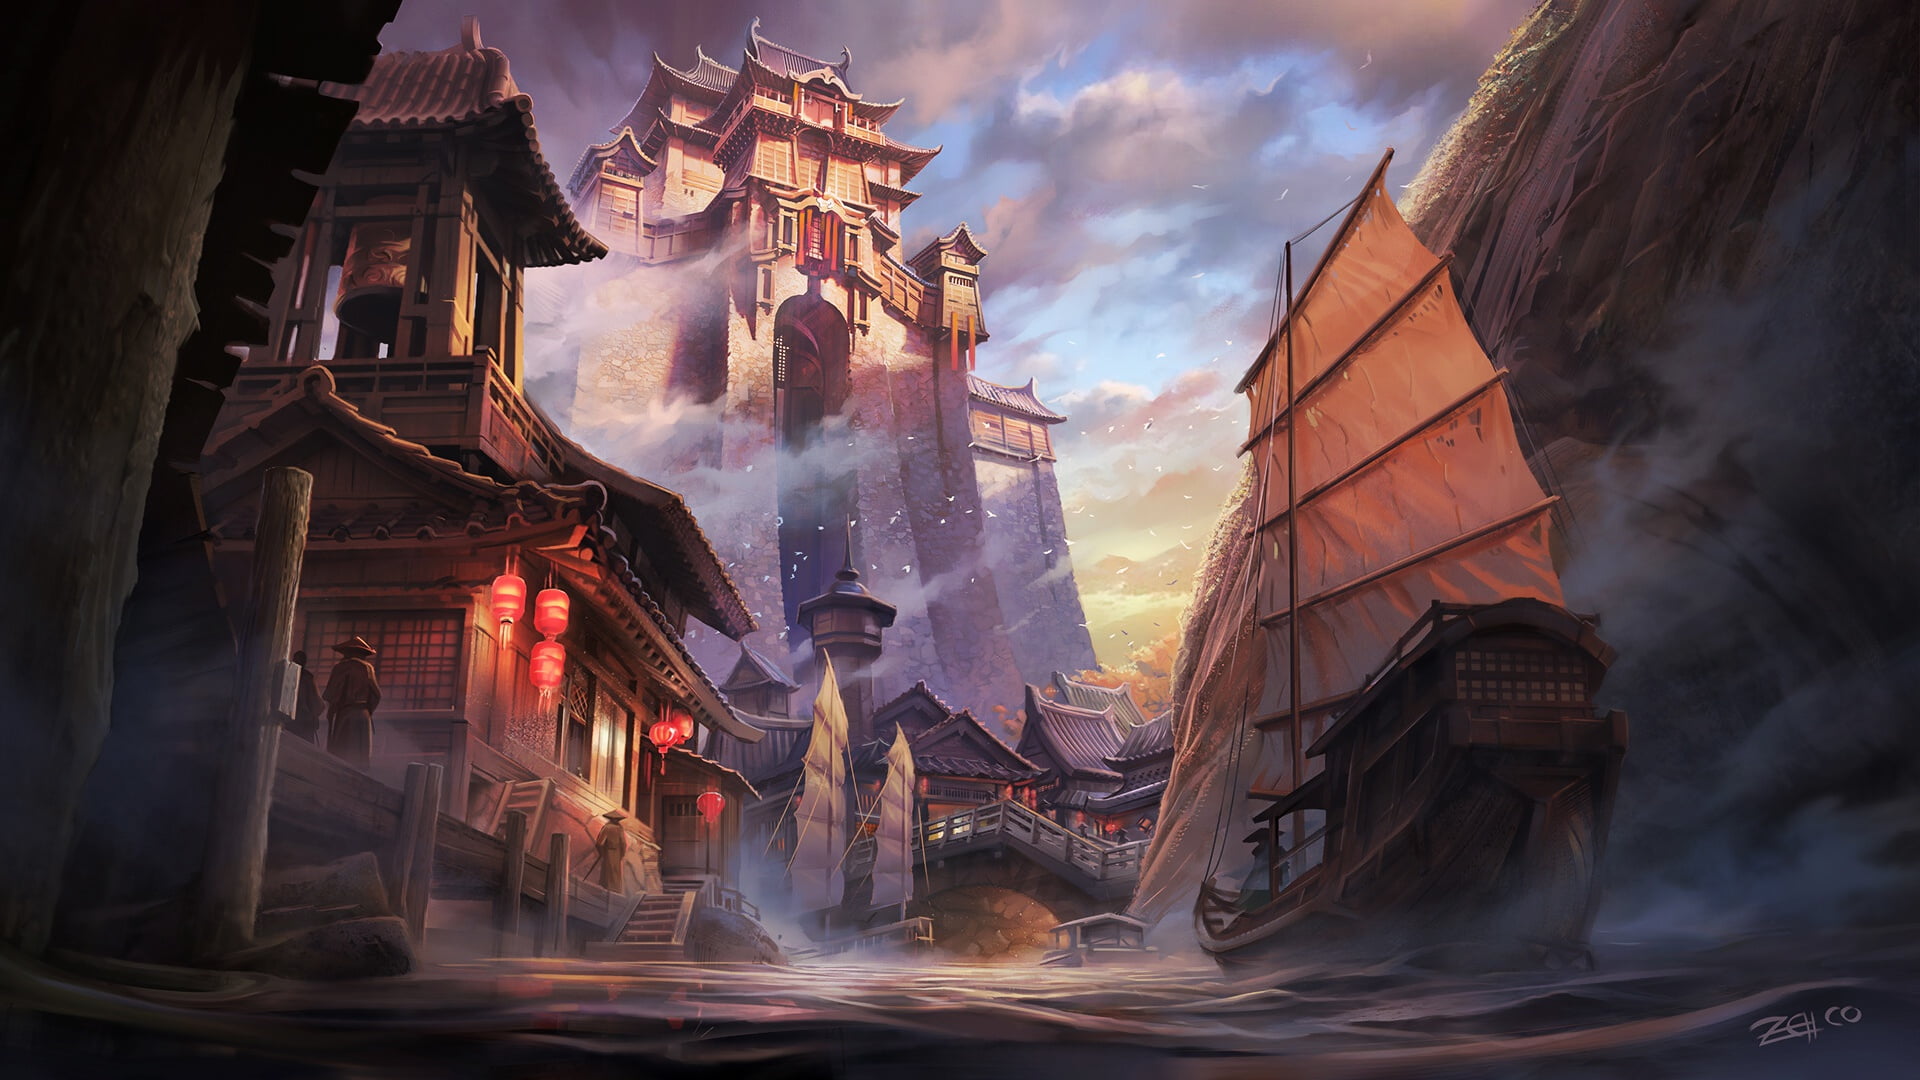 artwork, fantasy city, ship, fantasy art, palace, Asia, Chinese architecture